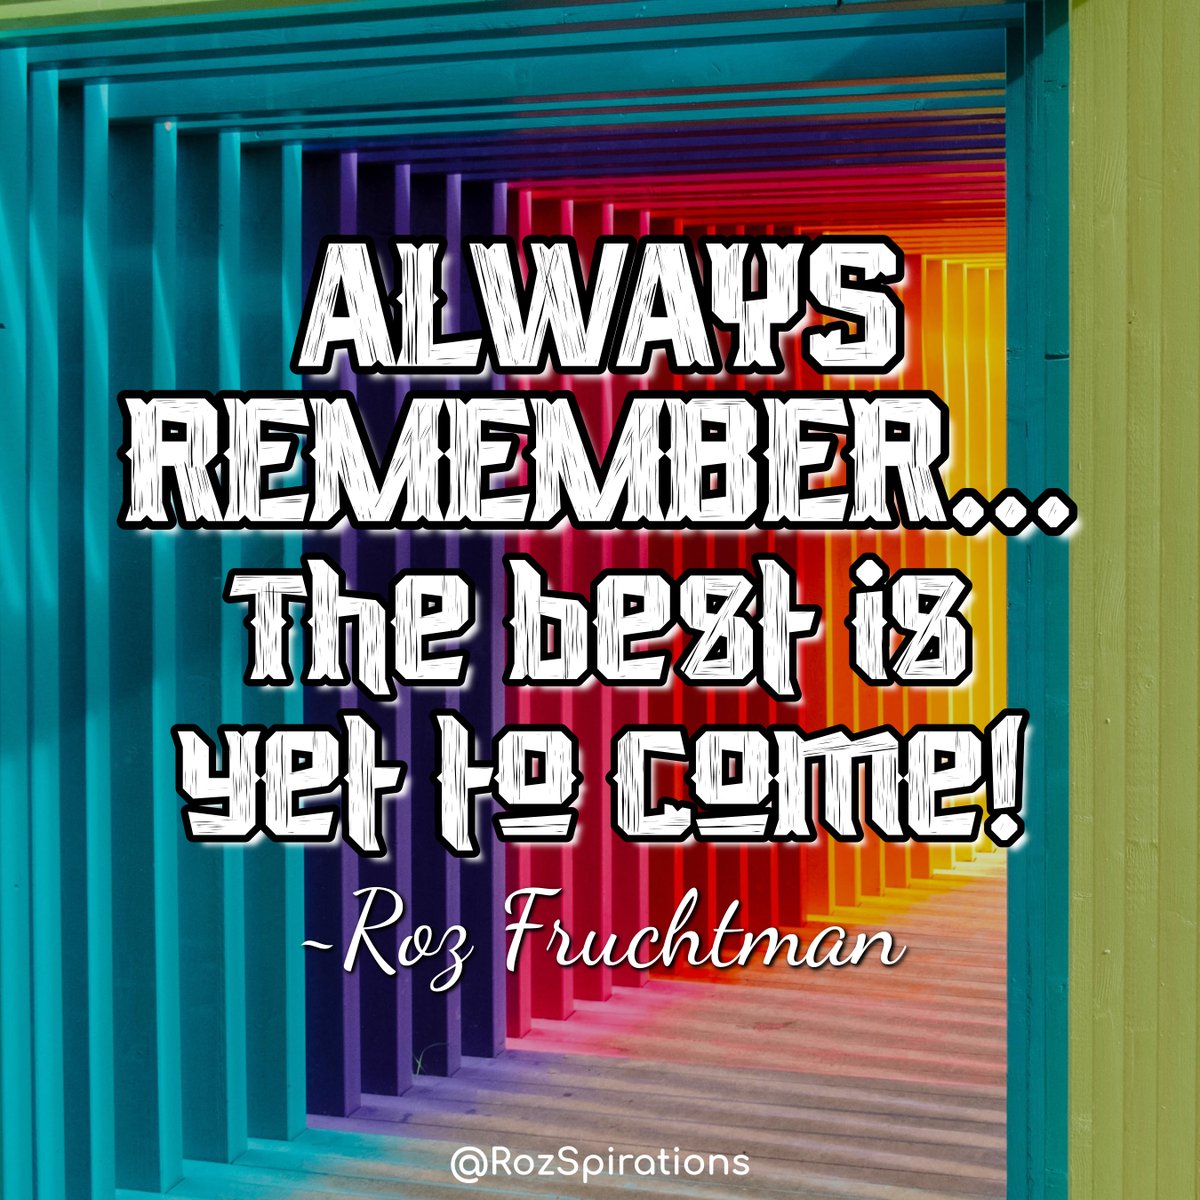 ALWAYS REMEMBER... The best is yet to come! ~Roz Fruchtman
#ThinkBIGSundayWithMarsha #RozSpirations #joytrain #lovetrain #qotd